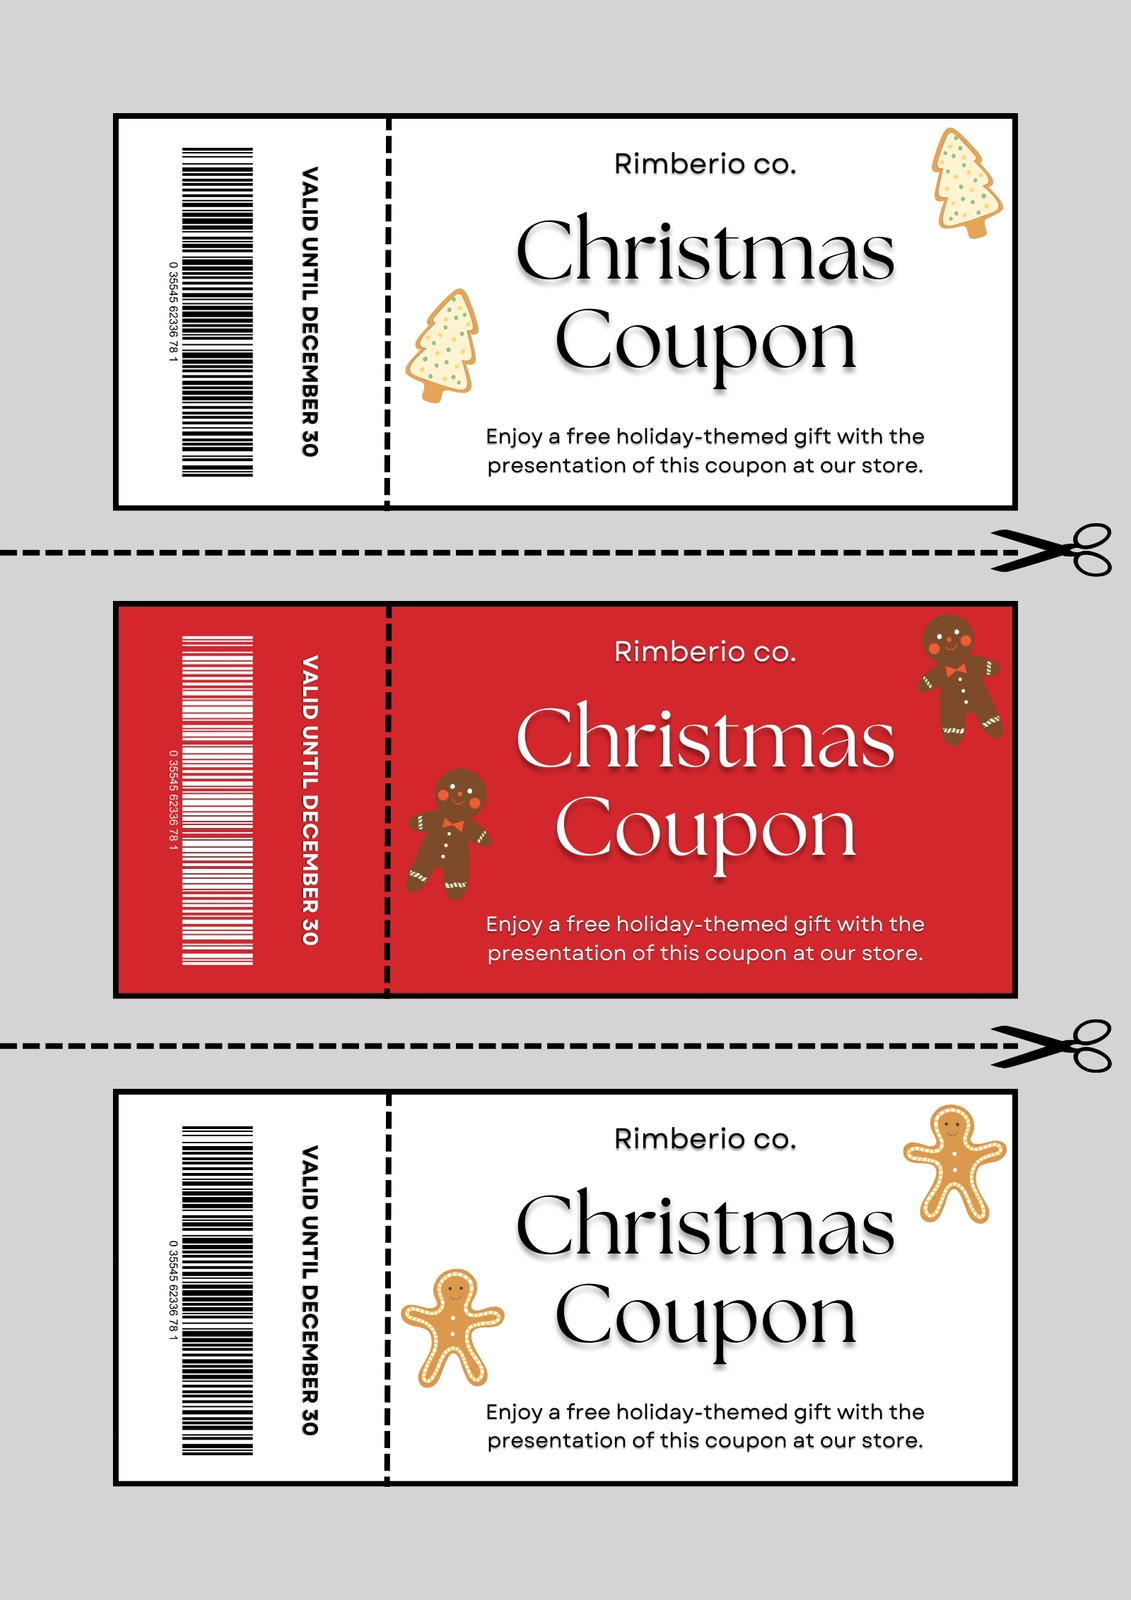 https://marketplace.canva.com/EAFzZOT4gA0/1/0/1131w/canva-red-%26-white-simple-christmas-coupon-gphQ3K80cgU.jpg